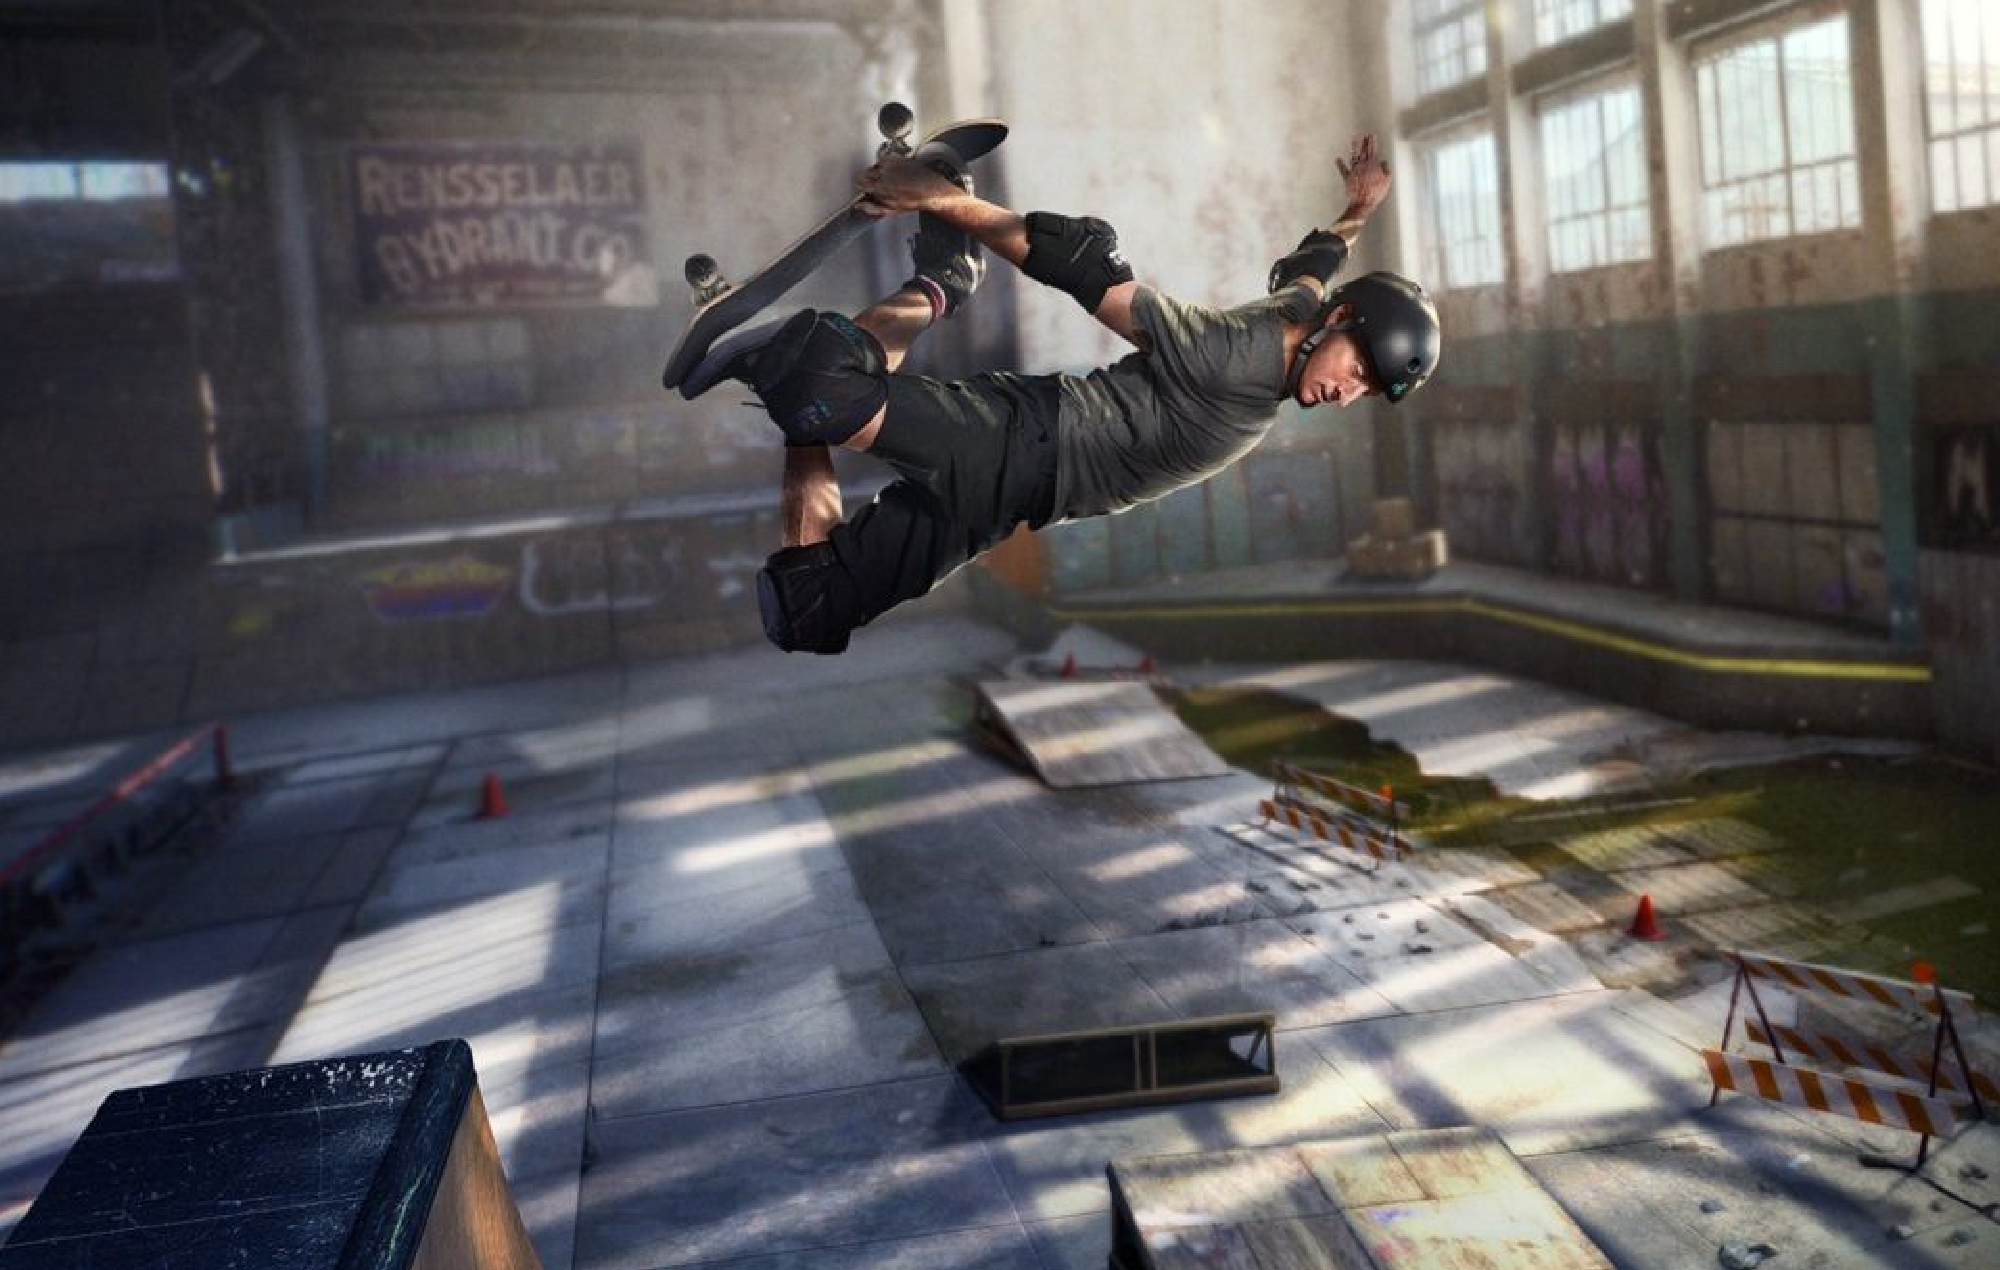 Tony Hawk's Pro Skater 4 GAME DEMO - download